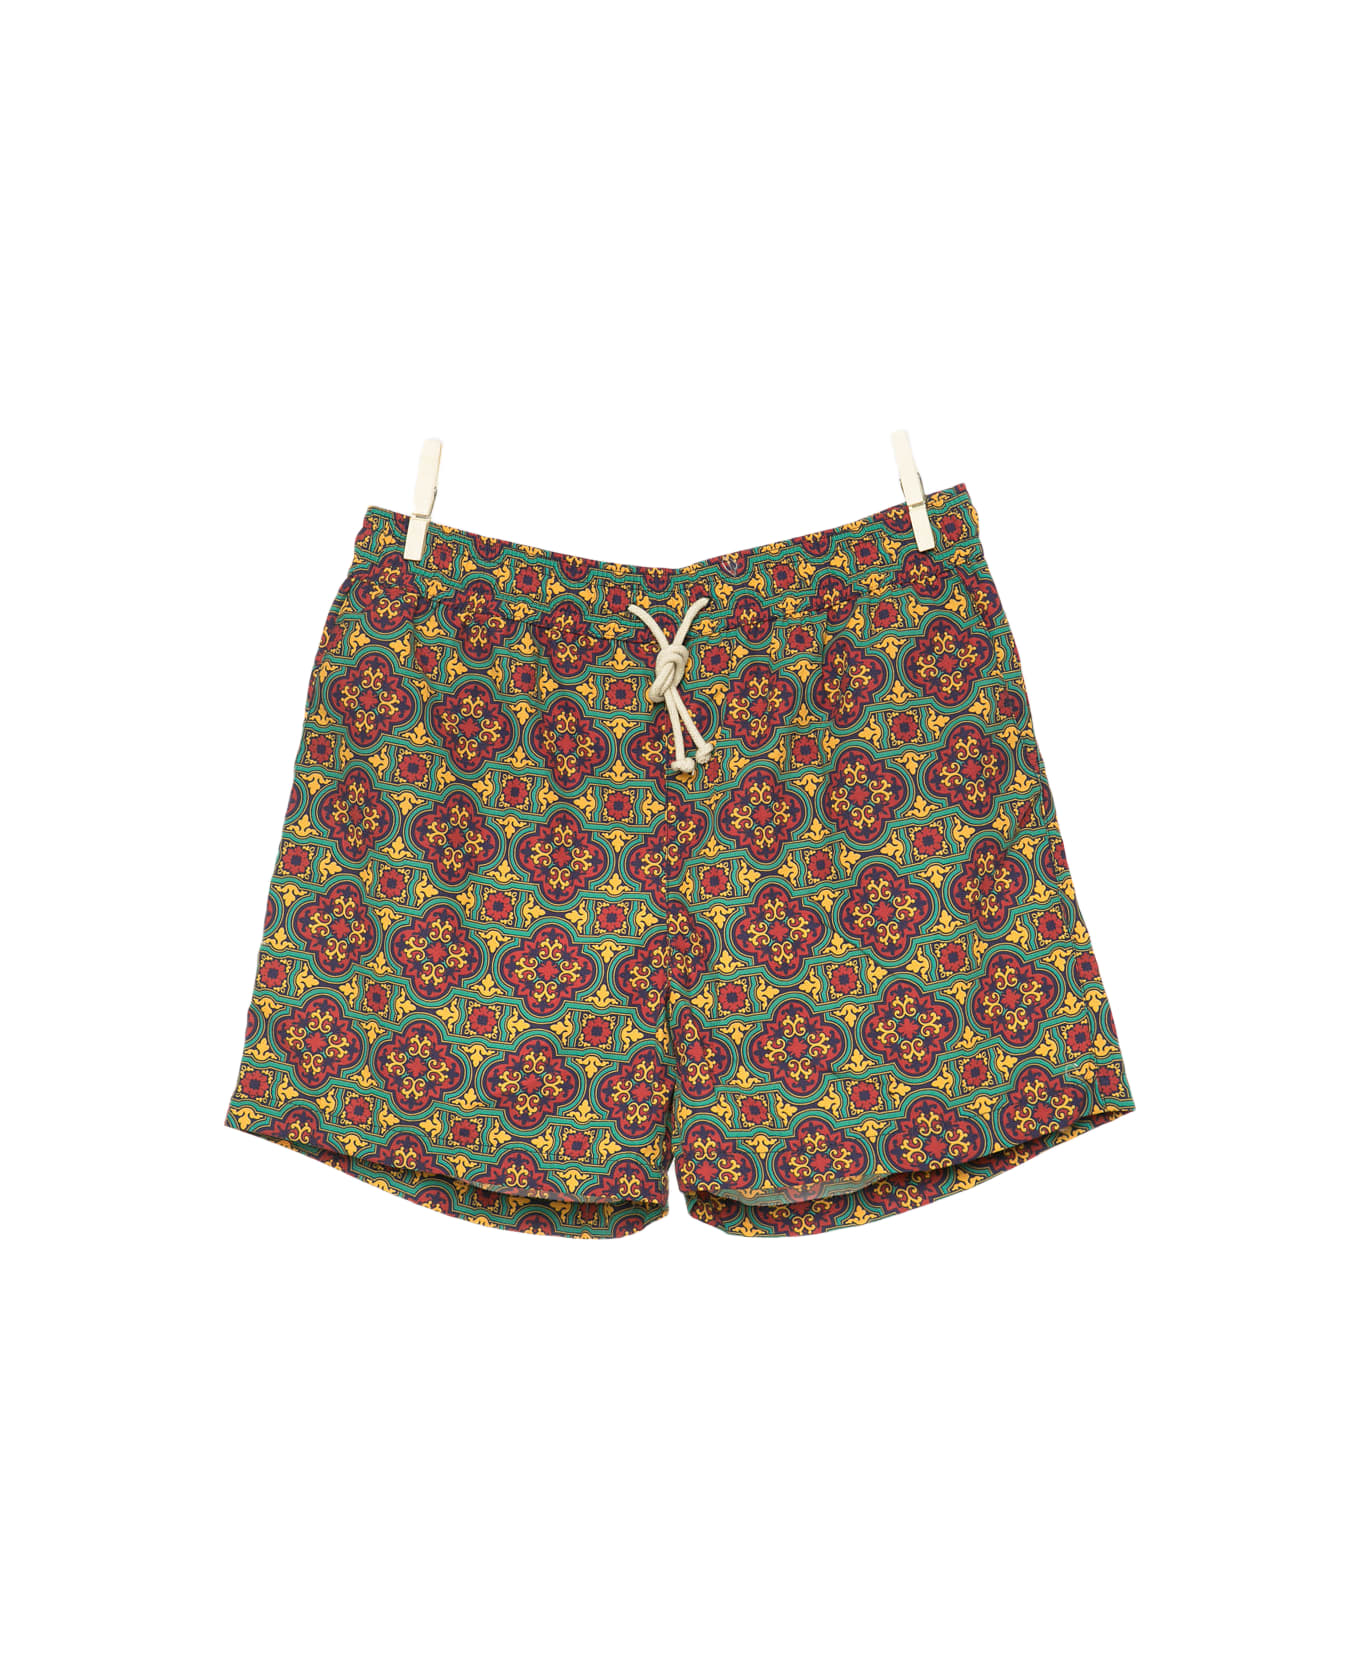 Ripa Ripa Pantelleria Swim Shorts - Green/Red